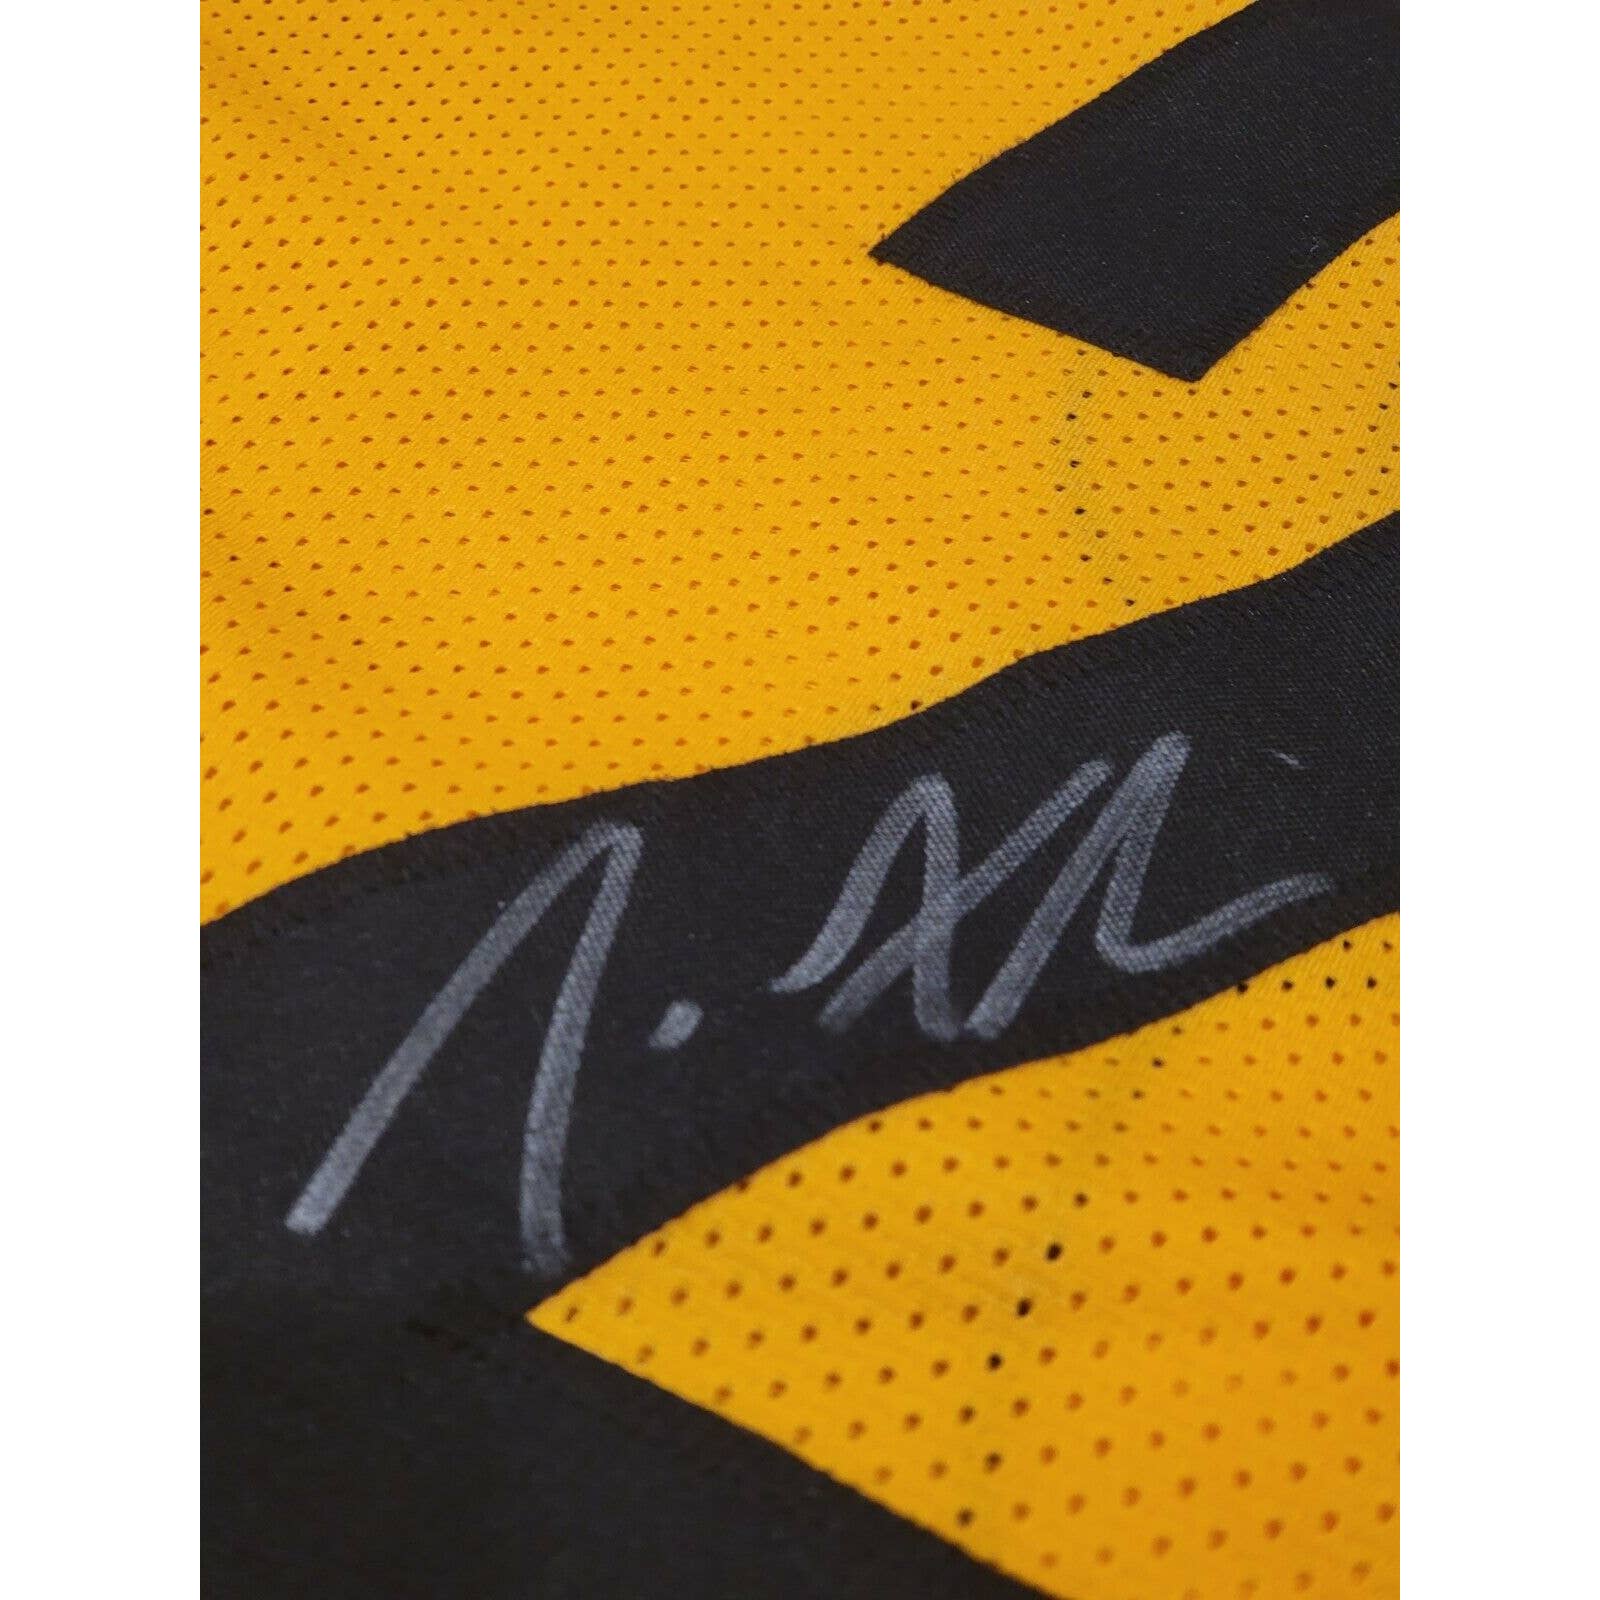 Joe Haden Autographed/Signed Jersey JSA Sticker Pittsburgh Steelers - TreasuresEvolved